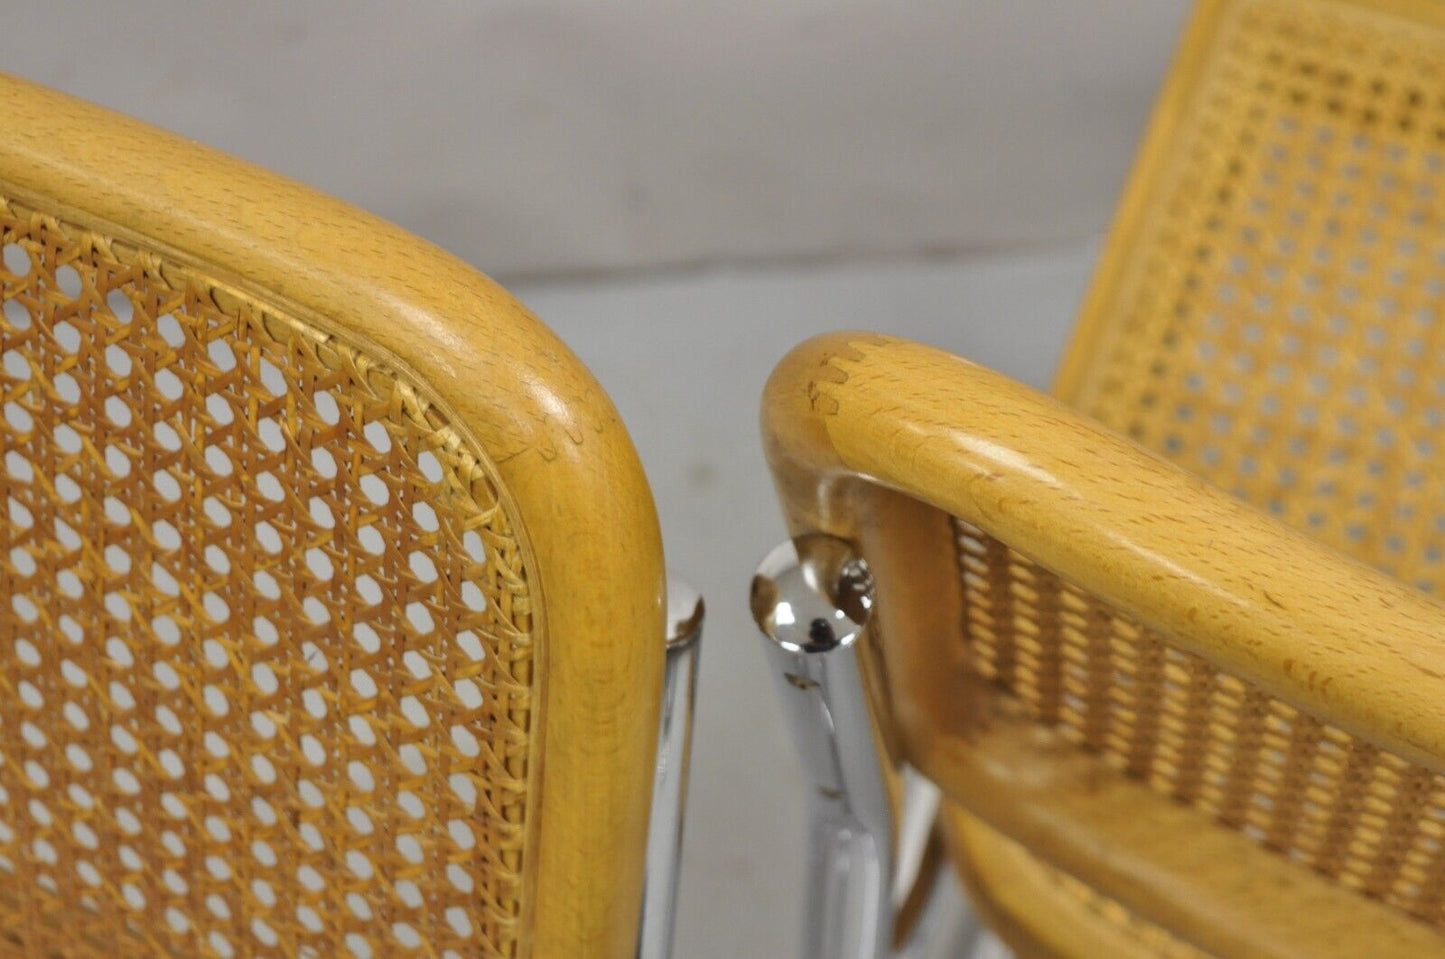 Marcel Breuer Mid Century Modern Italian Cane Cesca Dining Side Chair - Set of 4